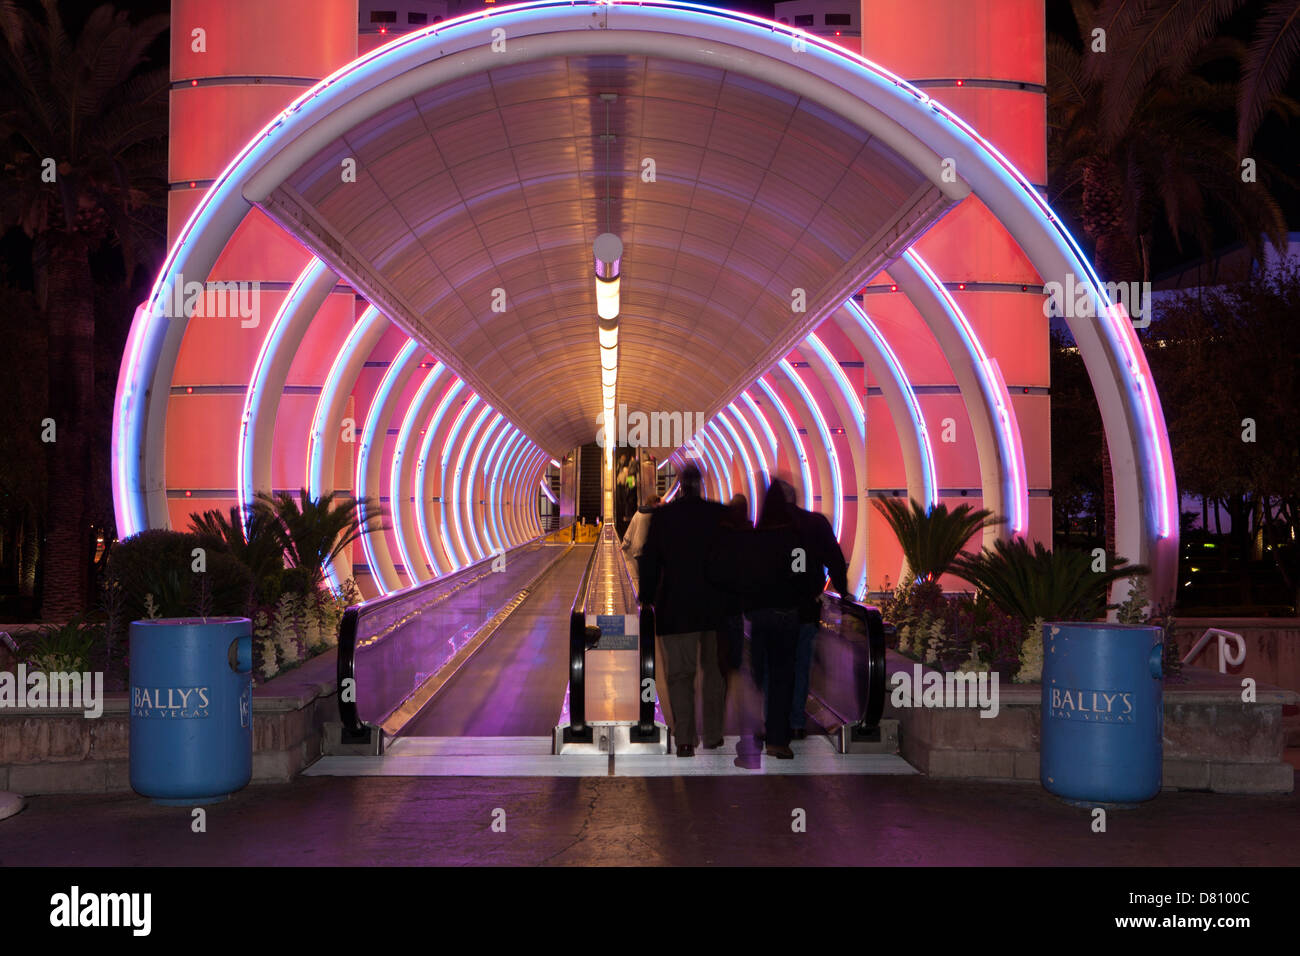 Moving sidewalk entrance to Monorail station entrance at Bally's casino at night-Las Vegas, Nevada, USA. Stock Photo